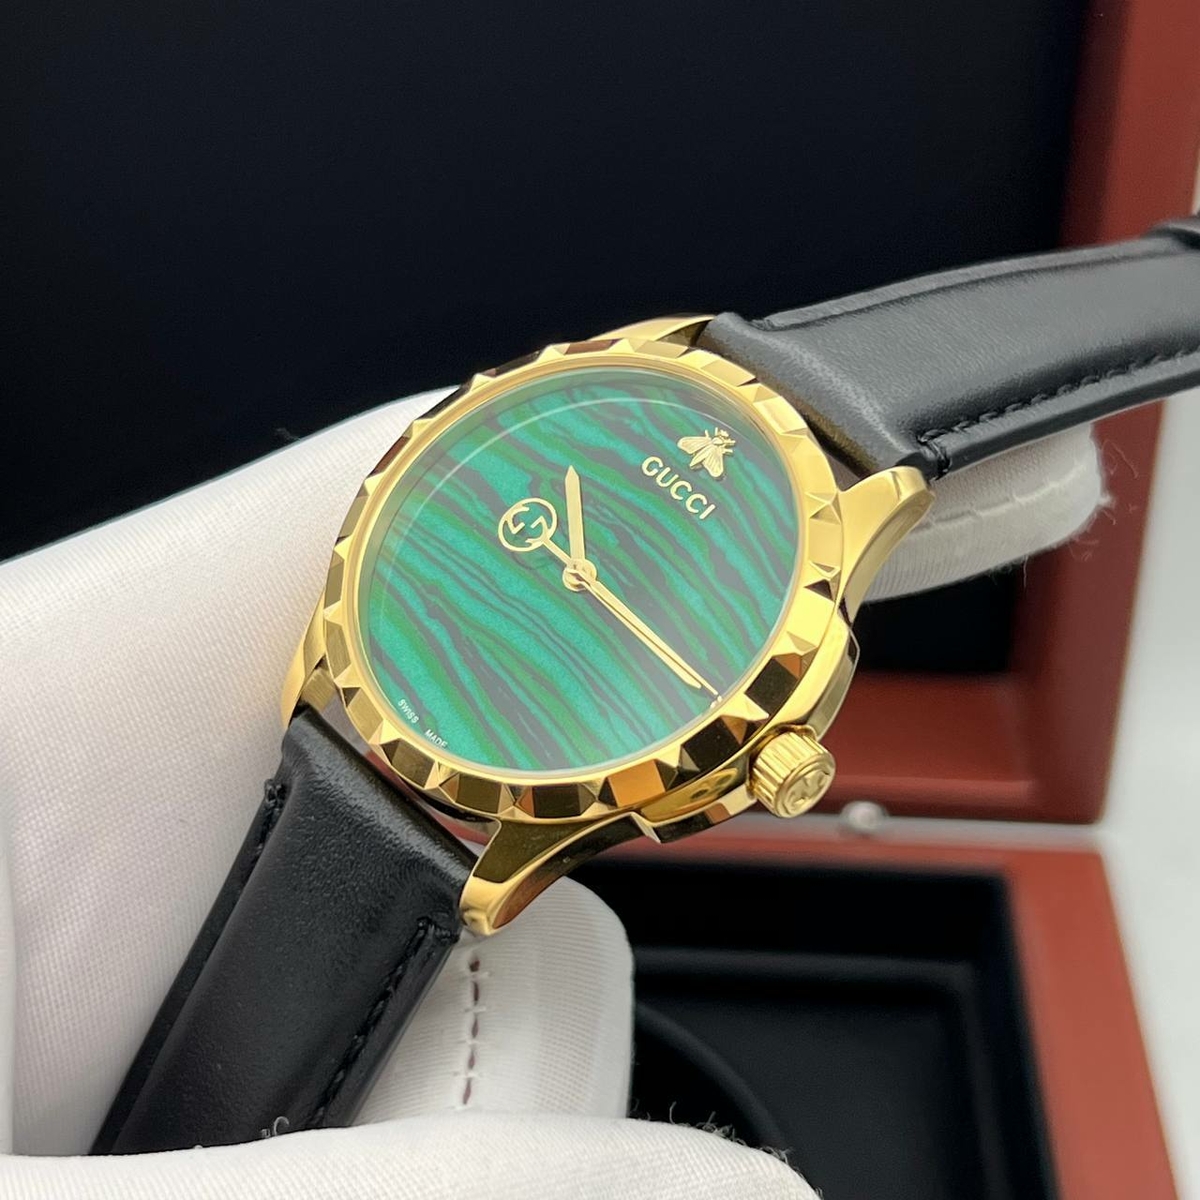 Gucci часы #1 в «Globestyle» арт.933995UR